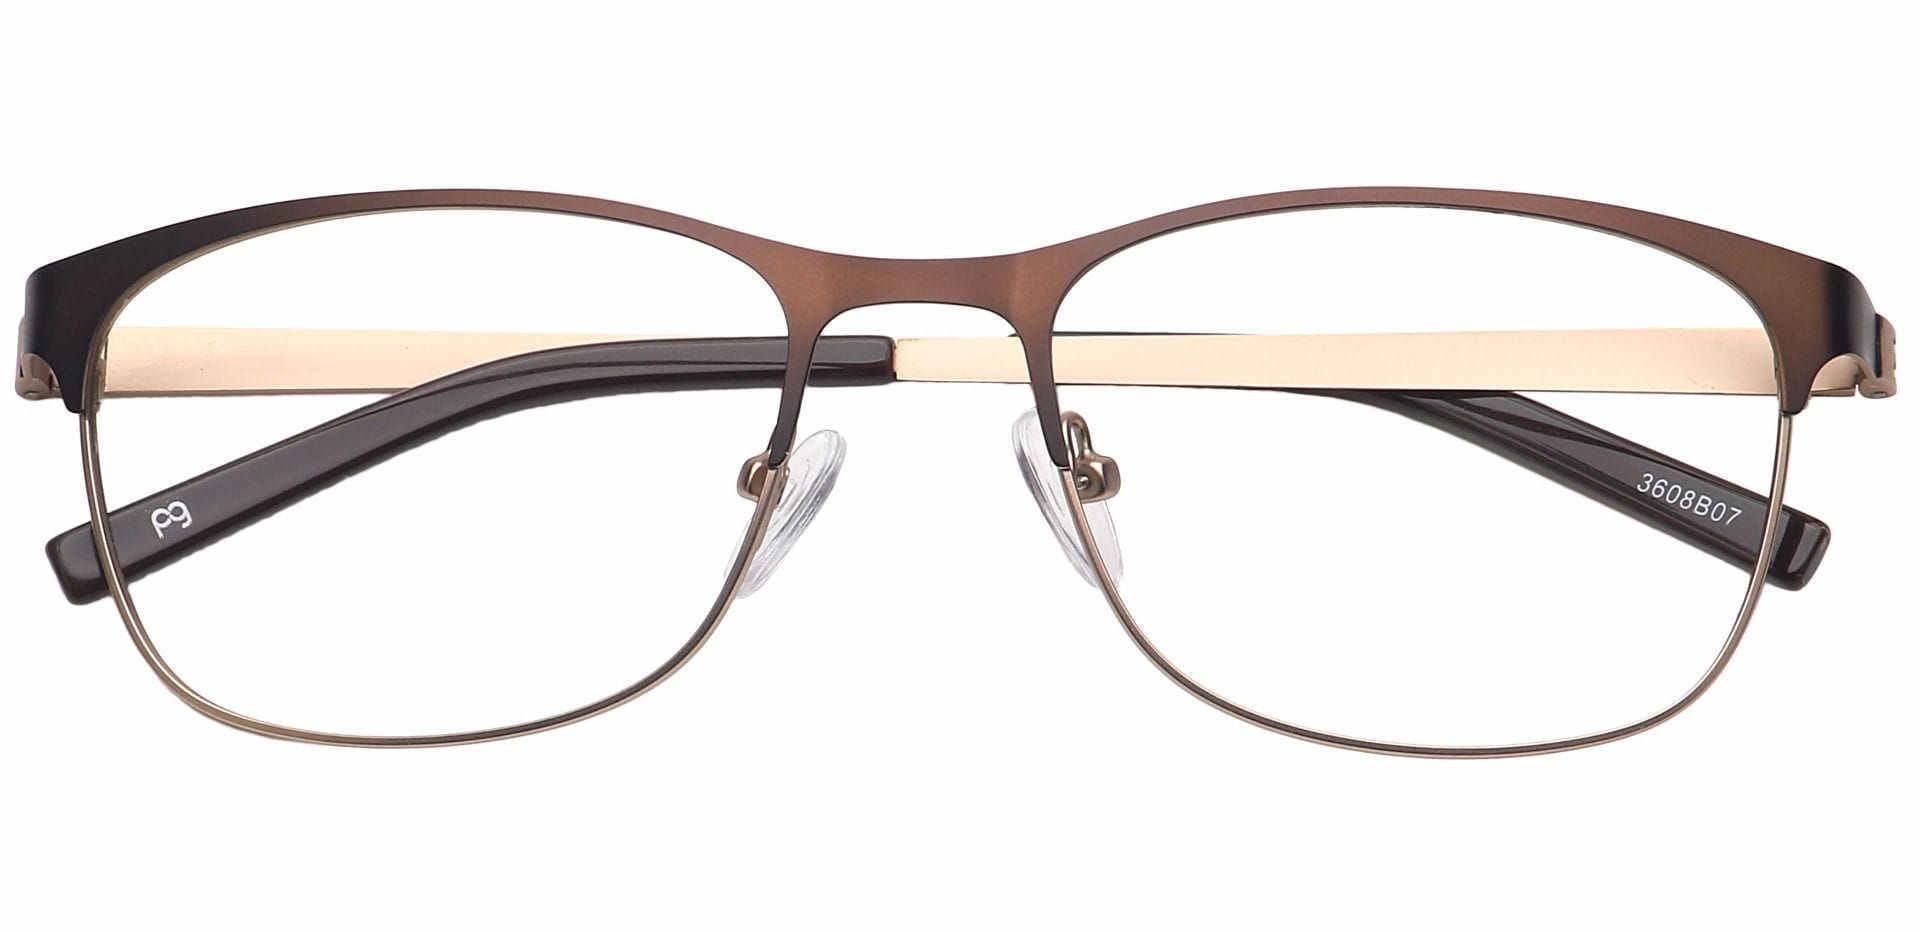 Tona Rectangle Progressive Glasses - Brown